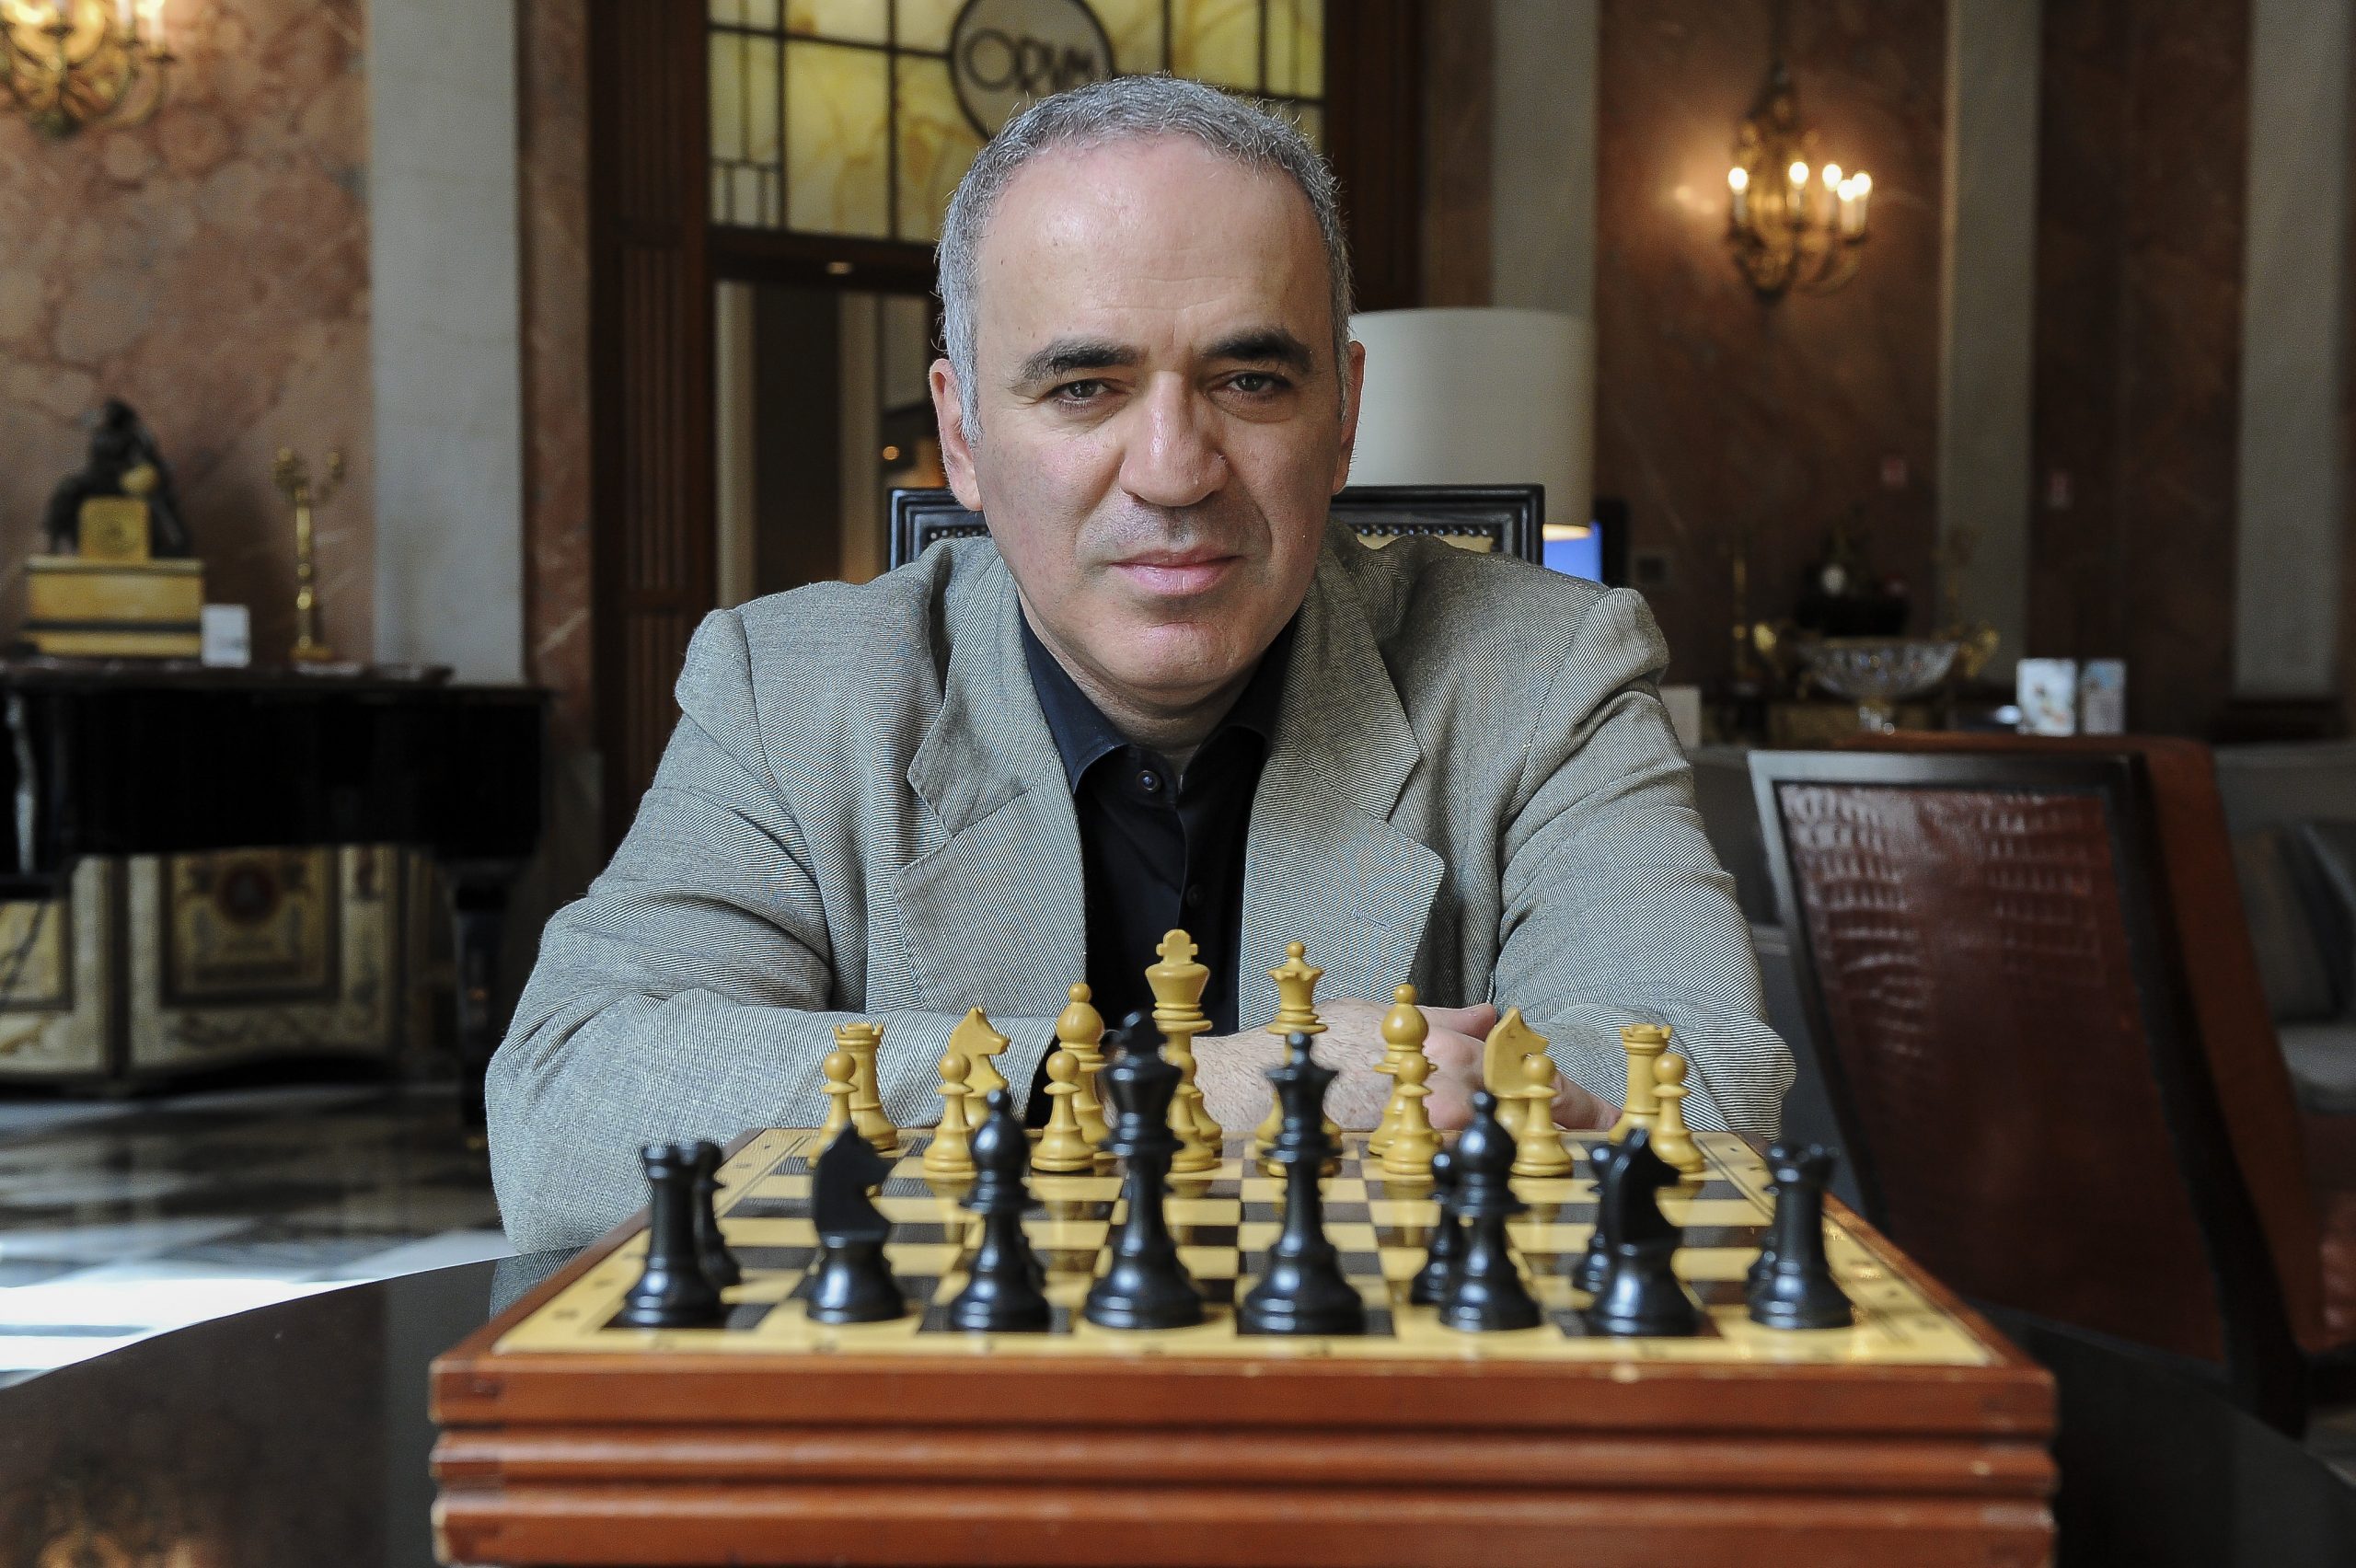 Garry Kasparov IQ, IBM Super Computer Deep Blue Vs Garry Kasparov